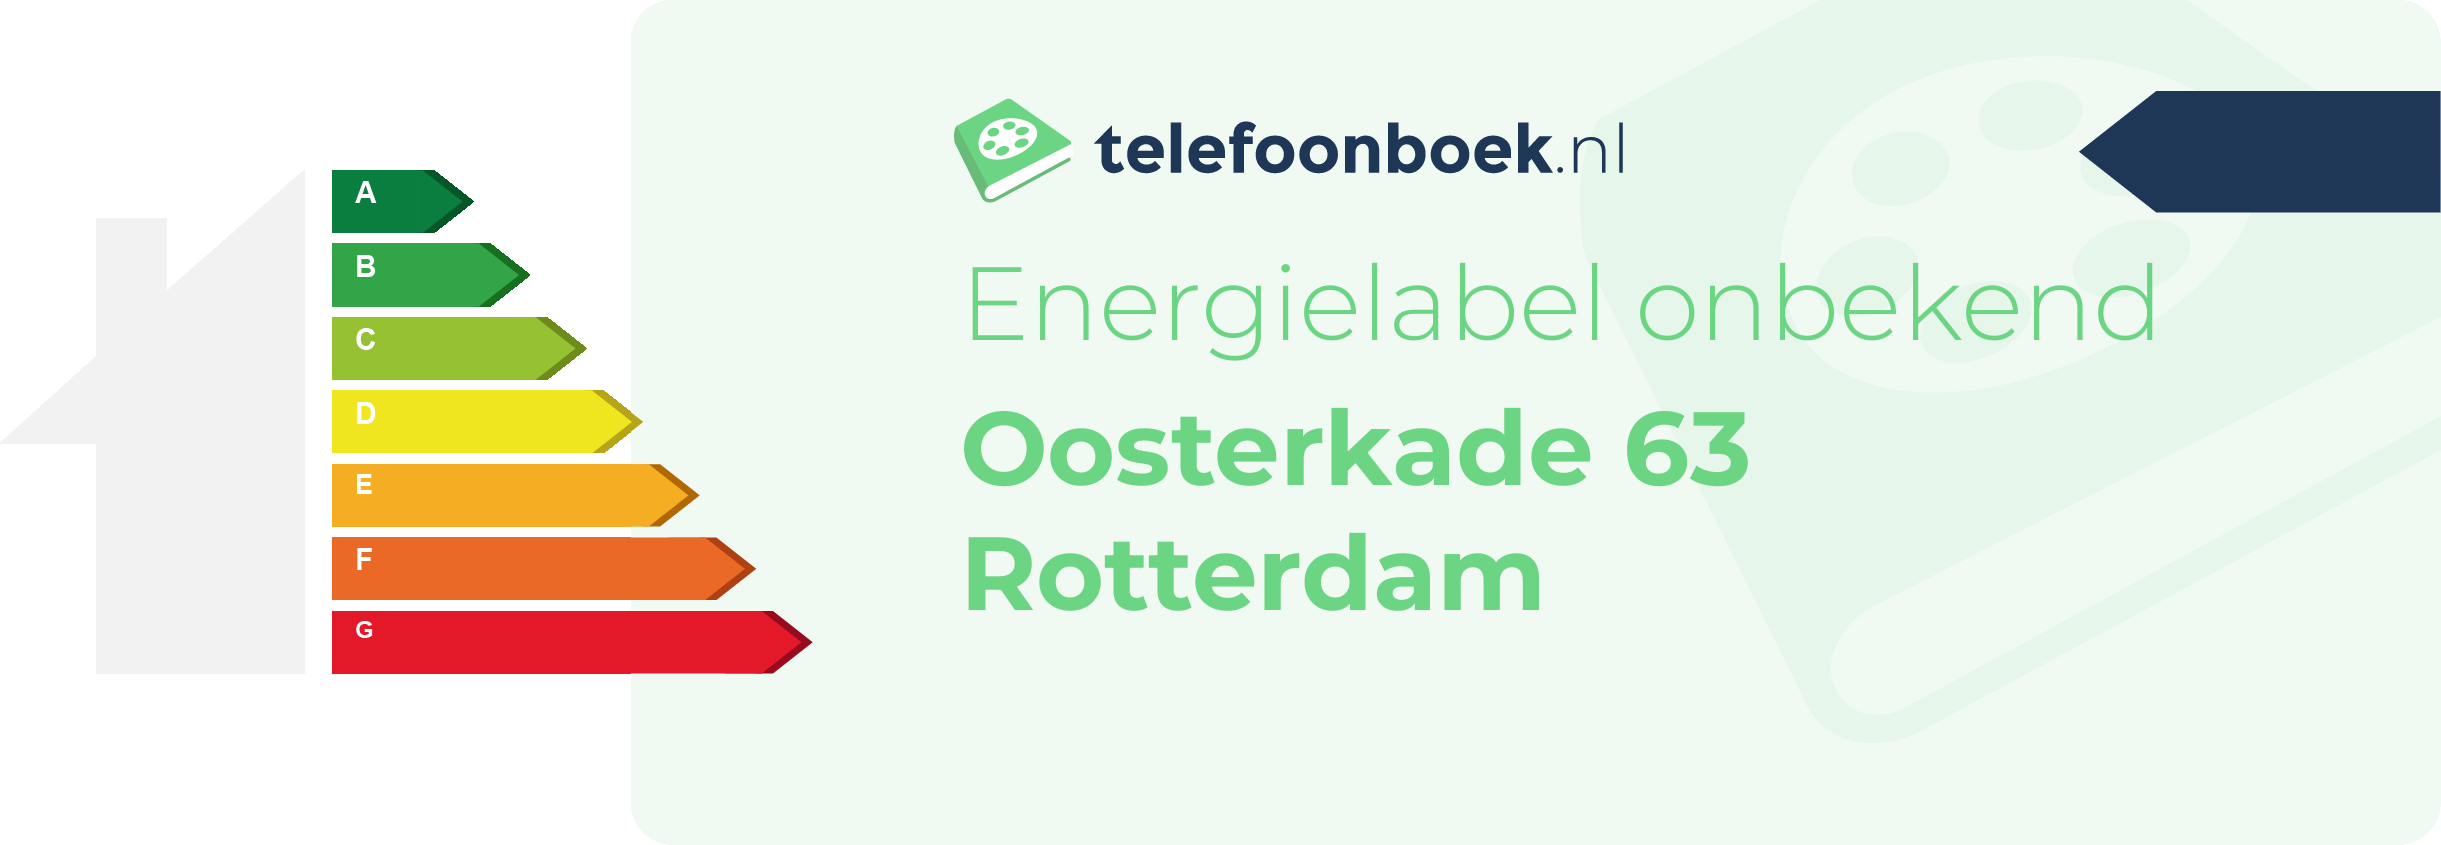 Energielabel Oosterkade 63 Rotterdam